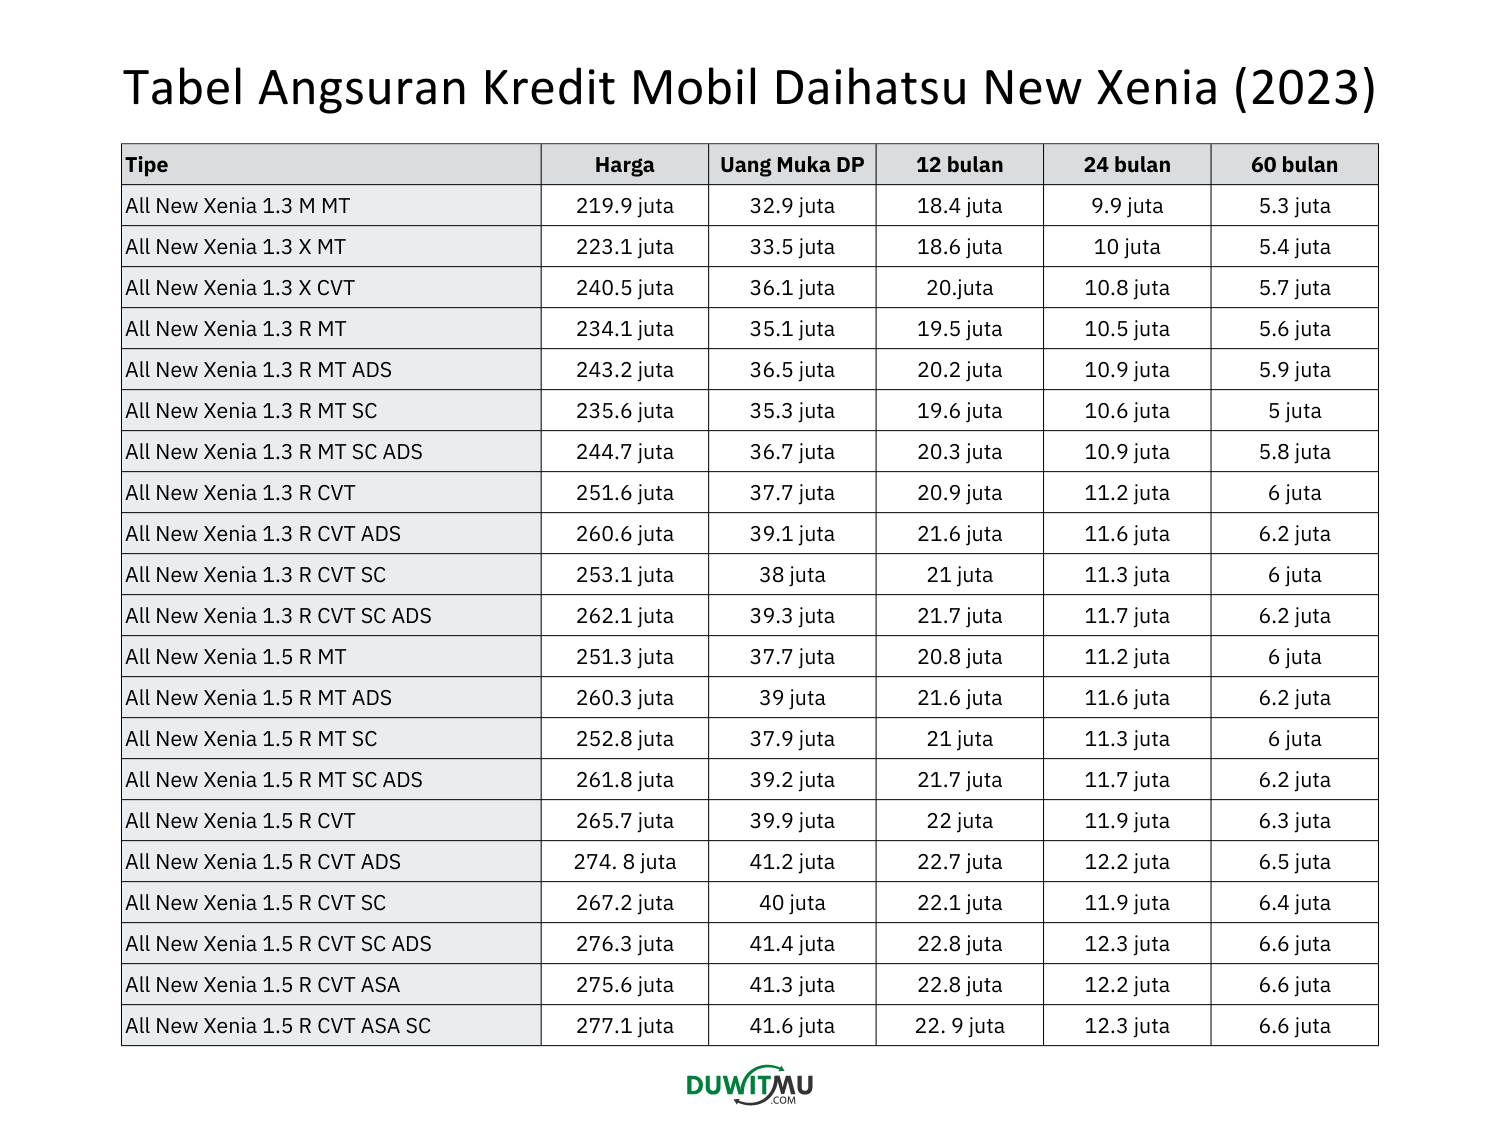 Tabel Angsuran Daihatsu All New Xenia